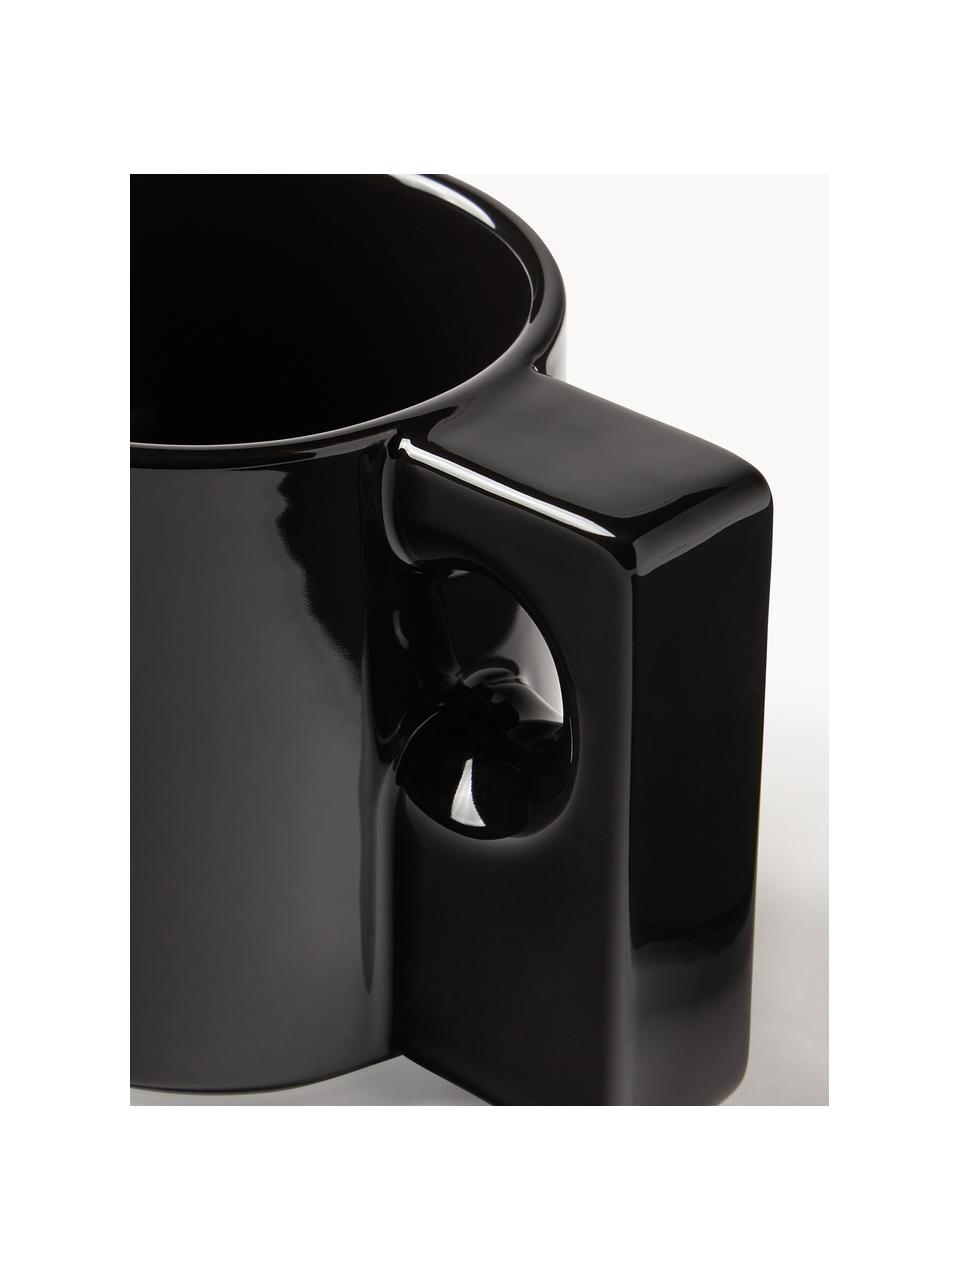 Porzellan-Tassen Keira, 2 Stück, Porzellan, Schwarz, Ø 9 x H 9 cm, 320 ml